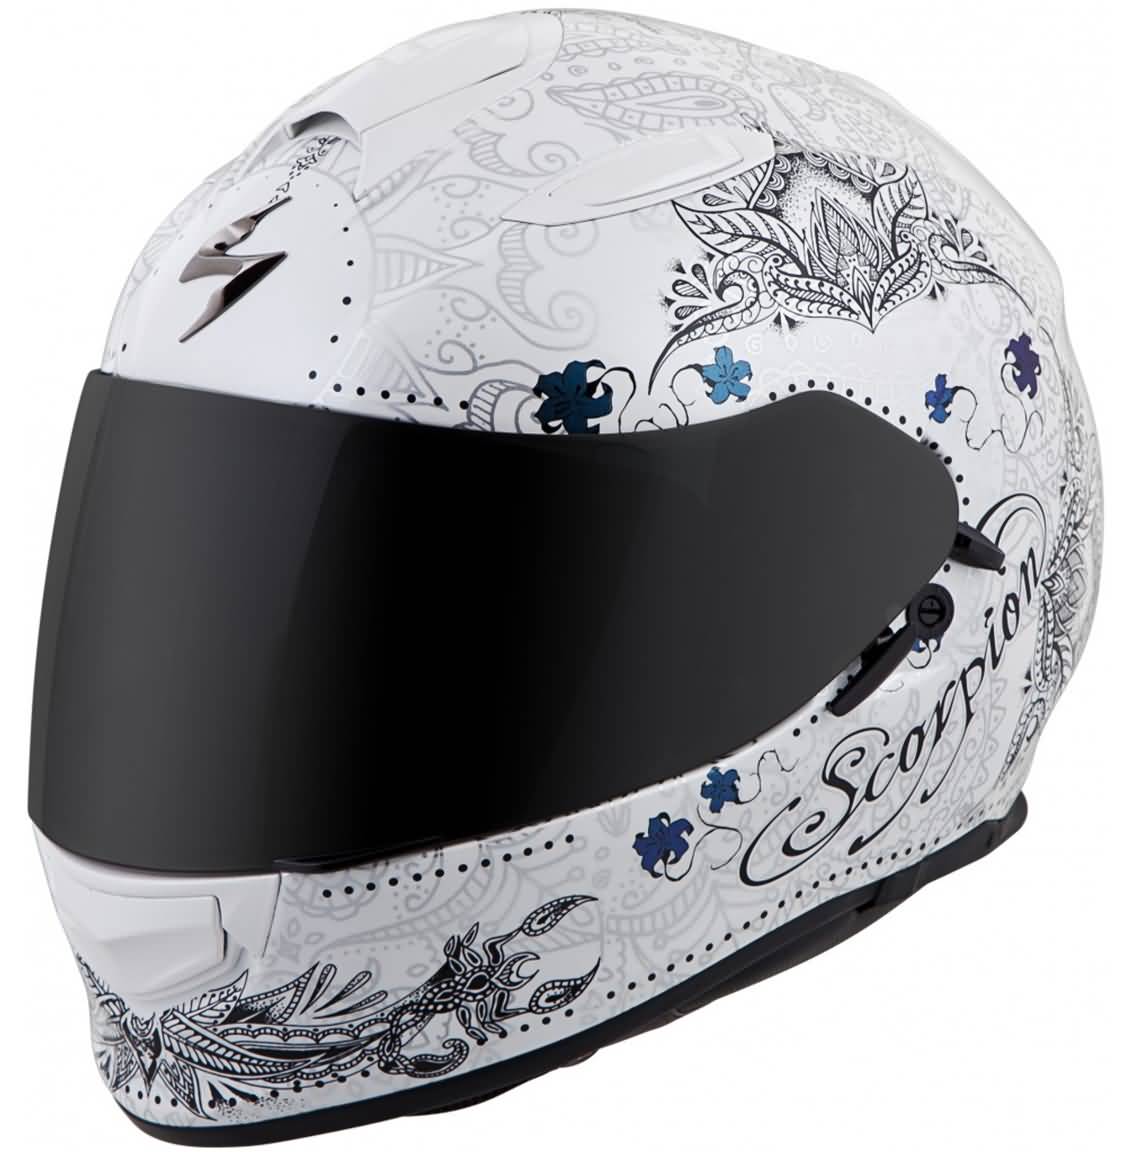 Scorpion 2017 | Premium Street Motorcycle Helmets Collection